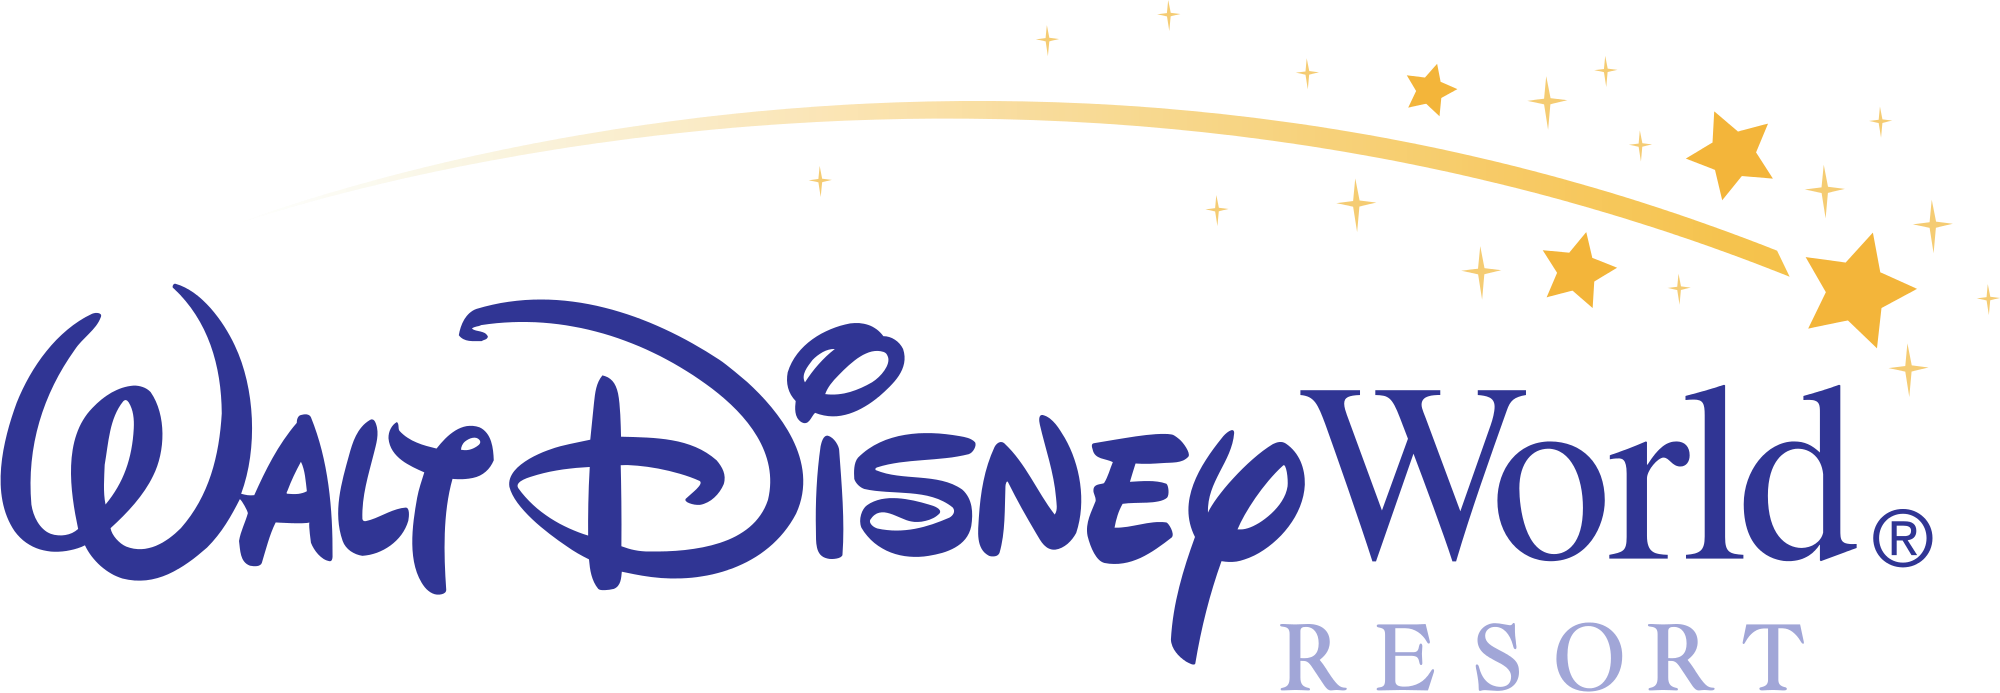 Walt Disney World Resorts Travel Agent